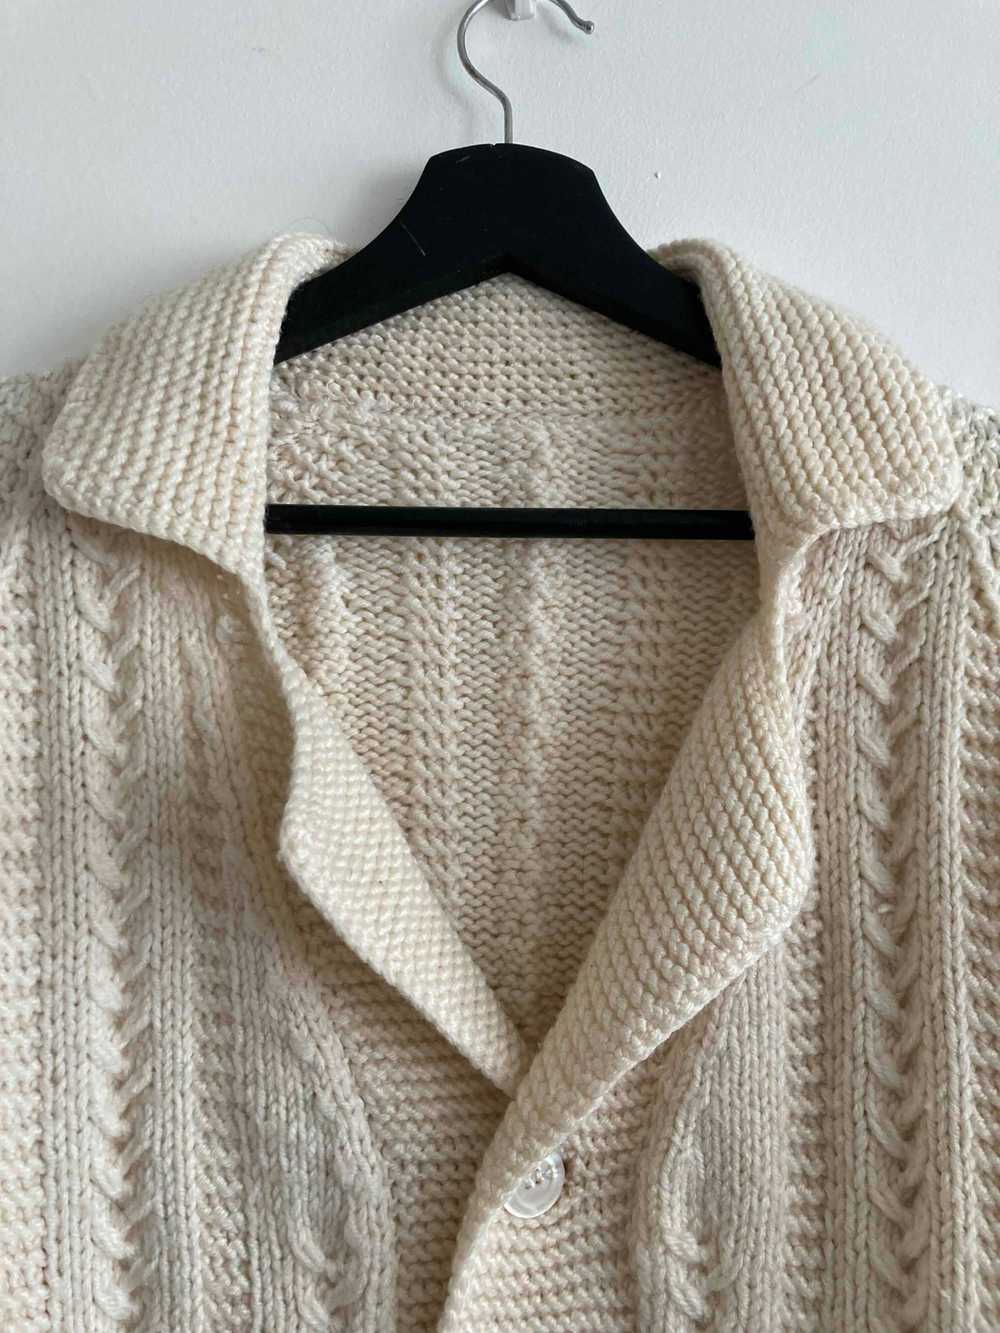 Wool jacket - Hand knitted wool jacket in Irish s… - image 2